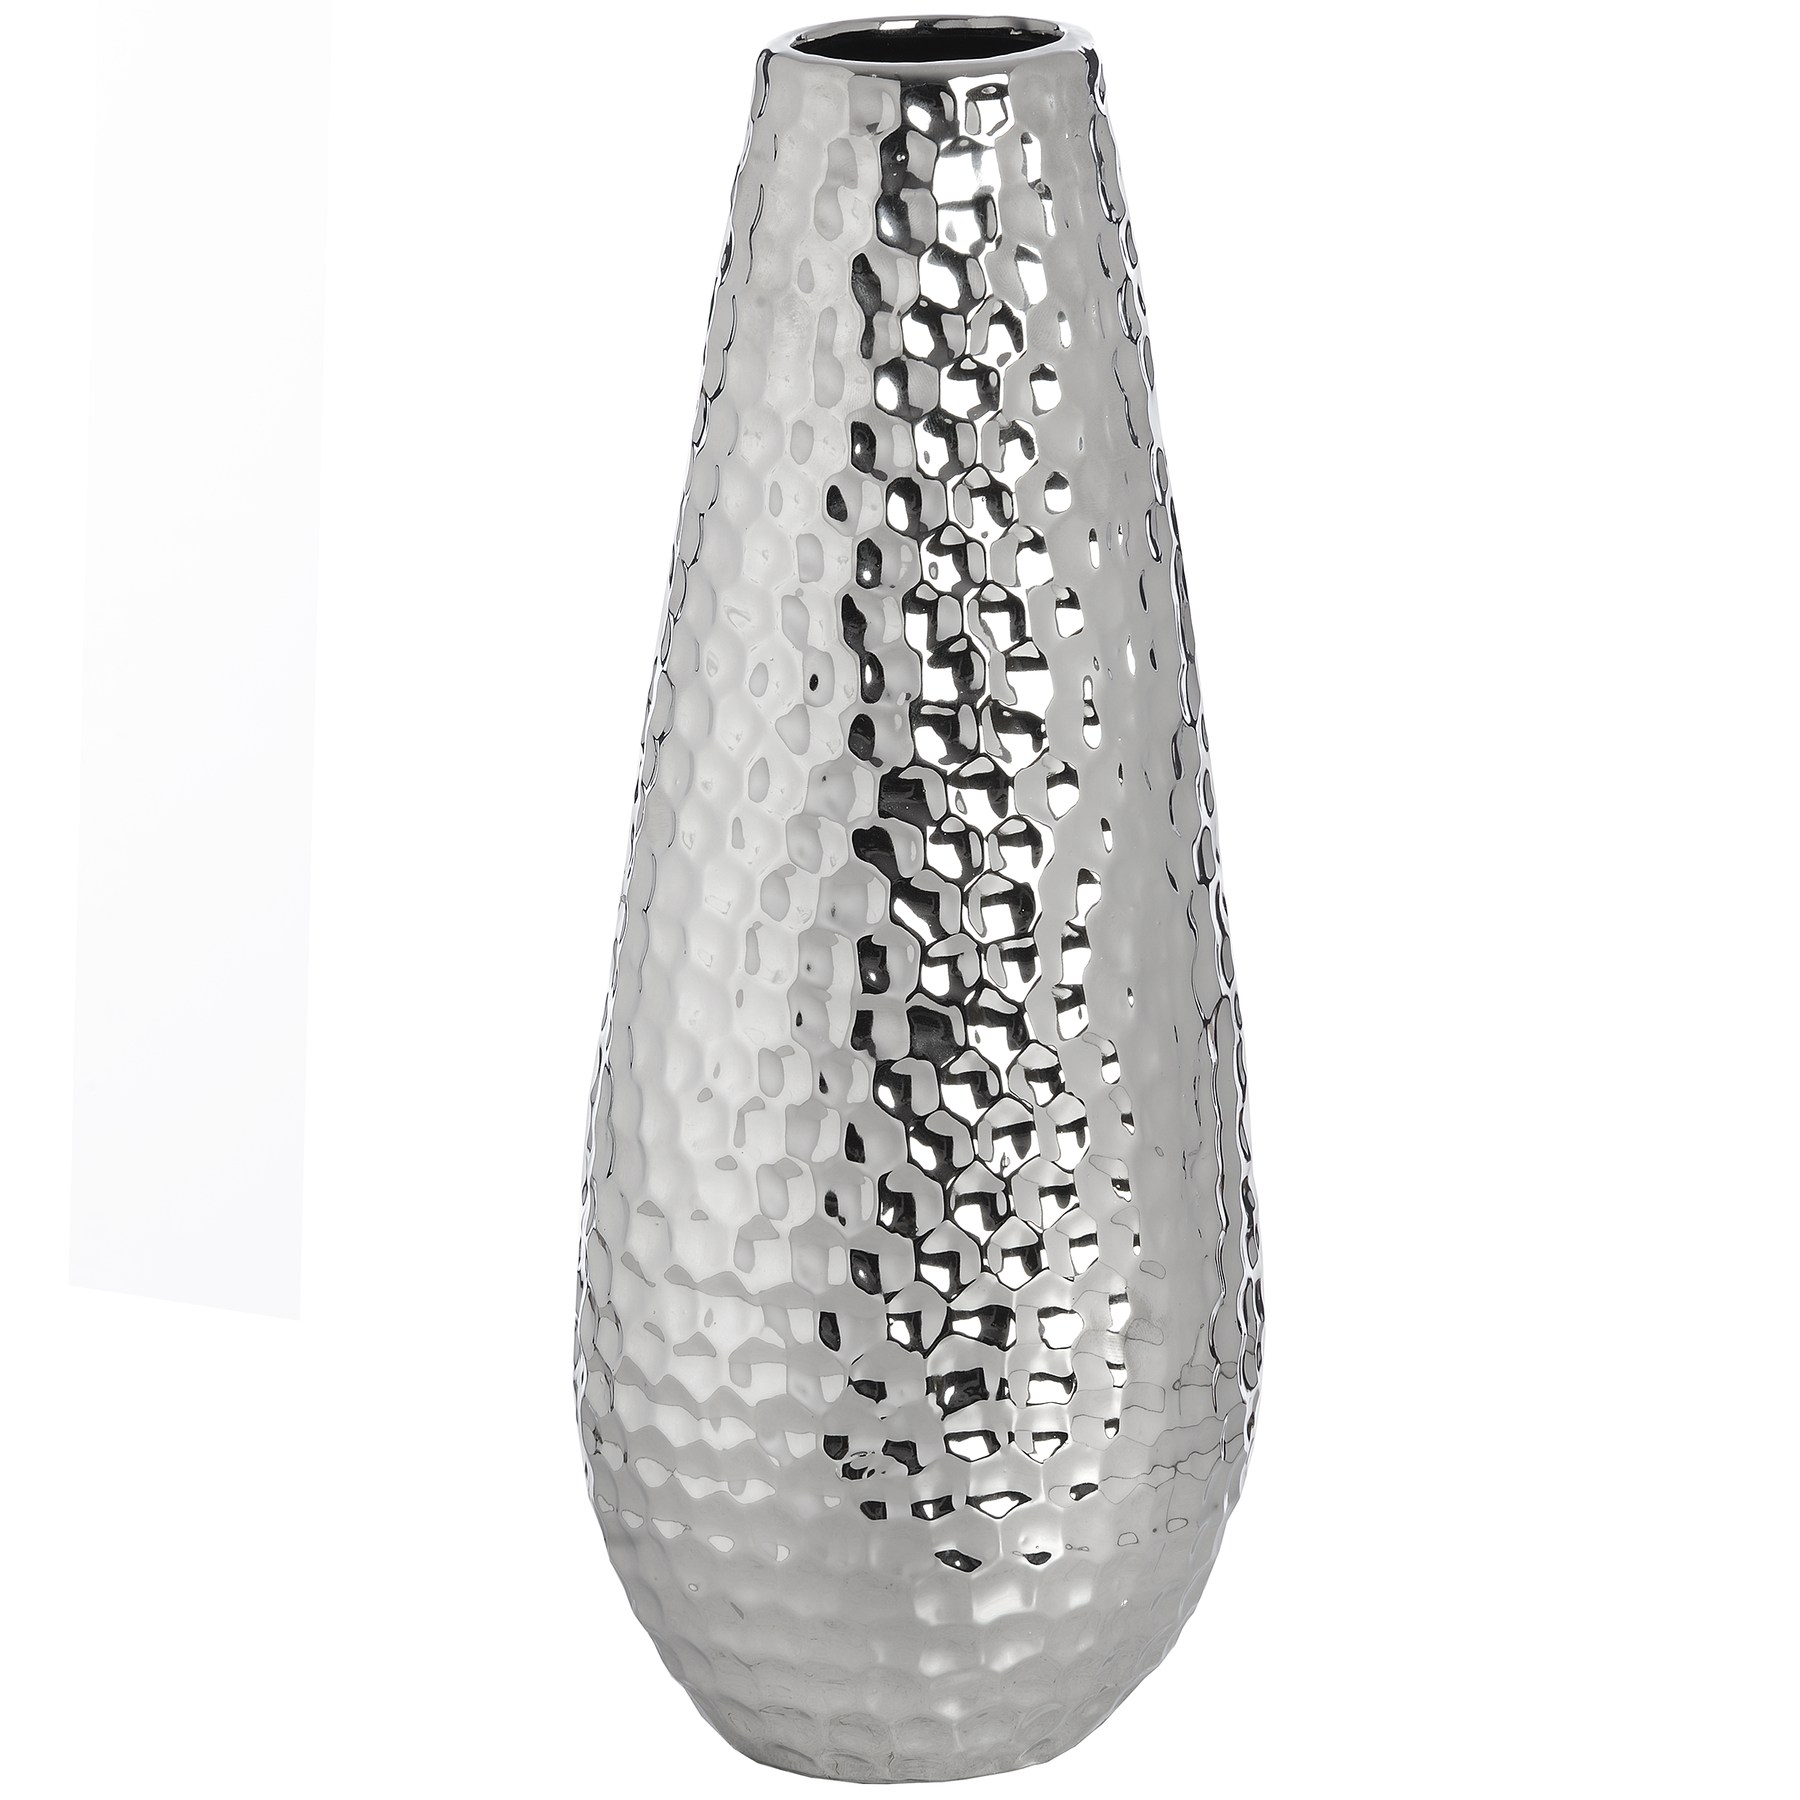 Large Silver Ceramic Bulb Vase in Dimple Effect - Image 1